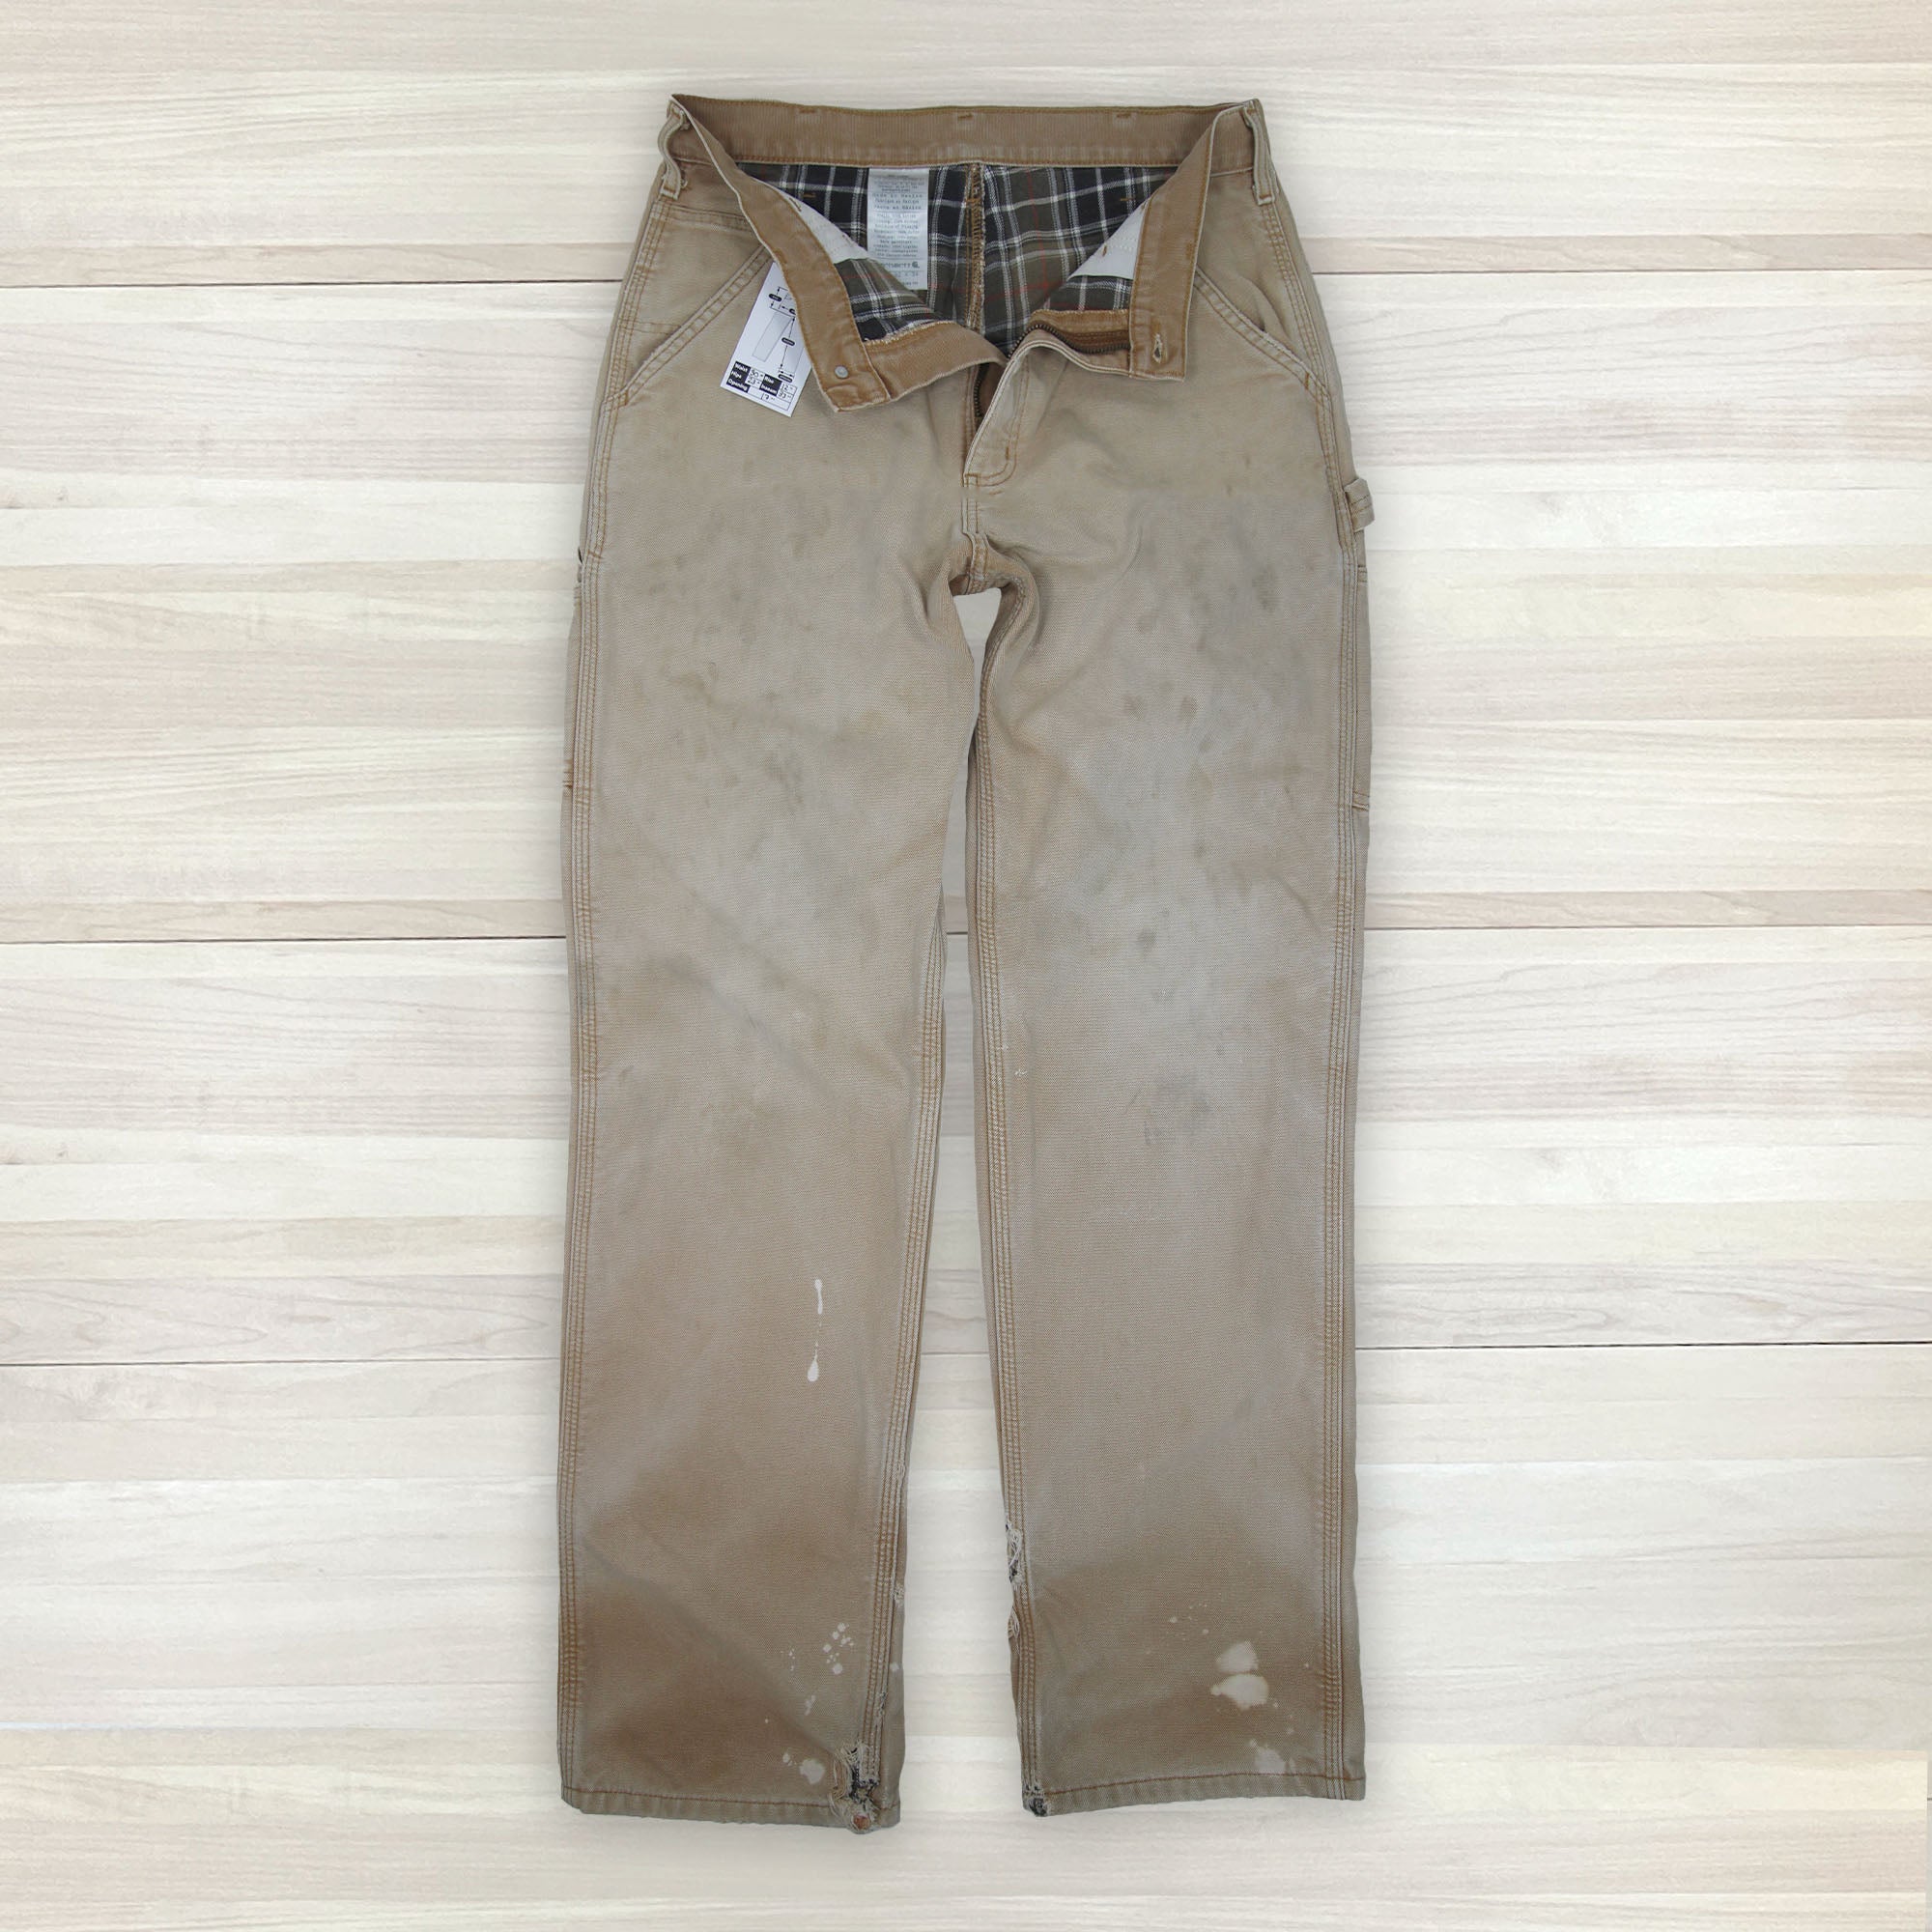 Men's Carhartt B111 BRN Flannel Lined Loose Fit Pants - Measures 30x33 - 0